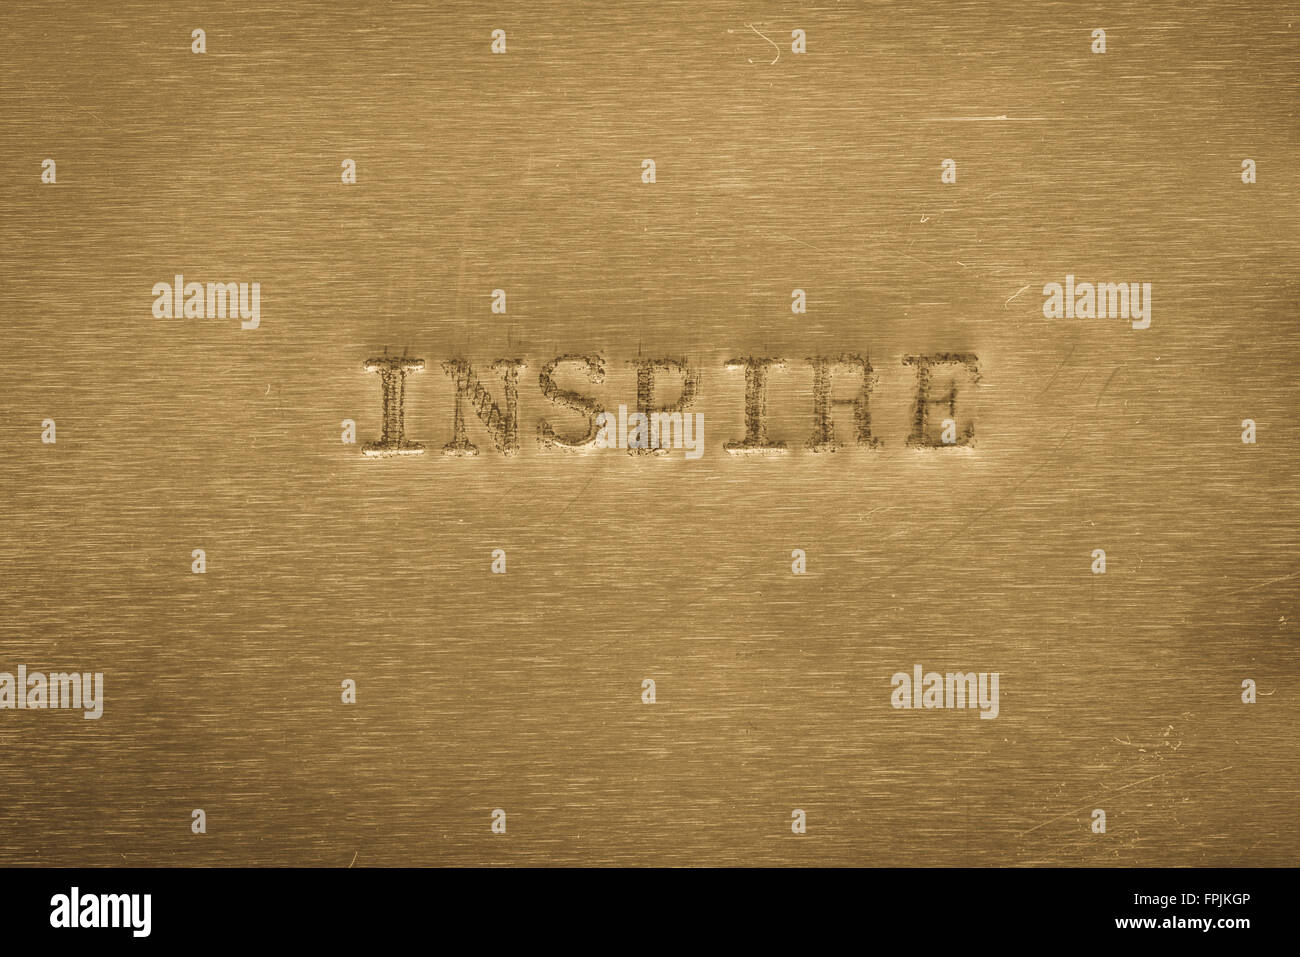 word inspire printed on golden metallic background Stock Photo